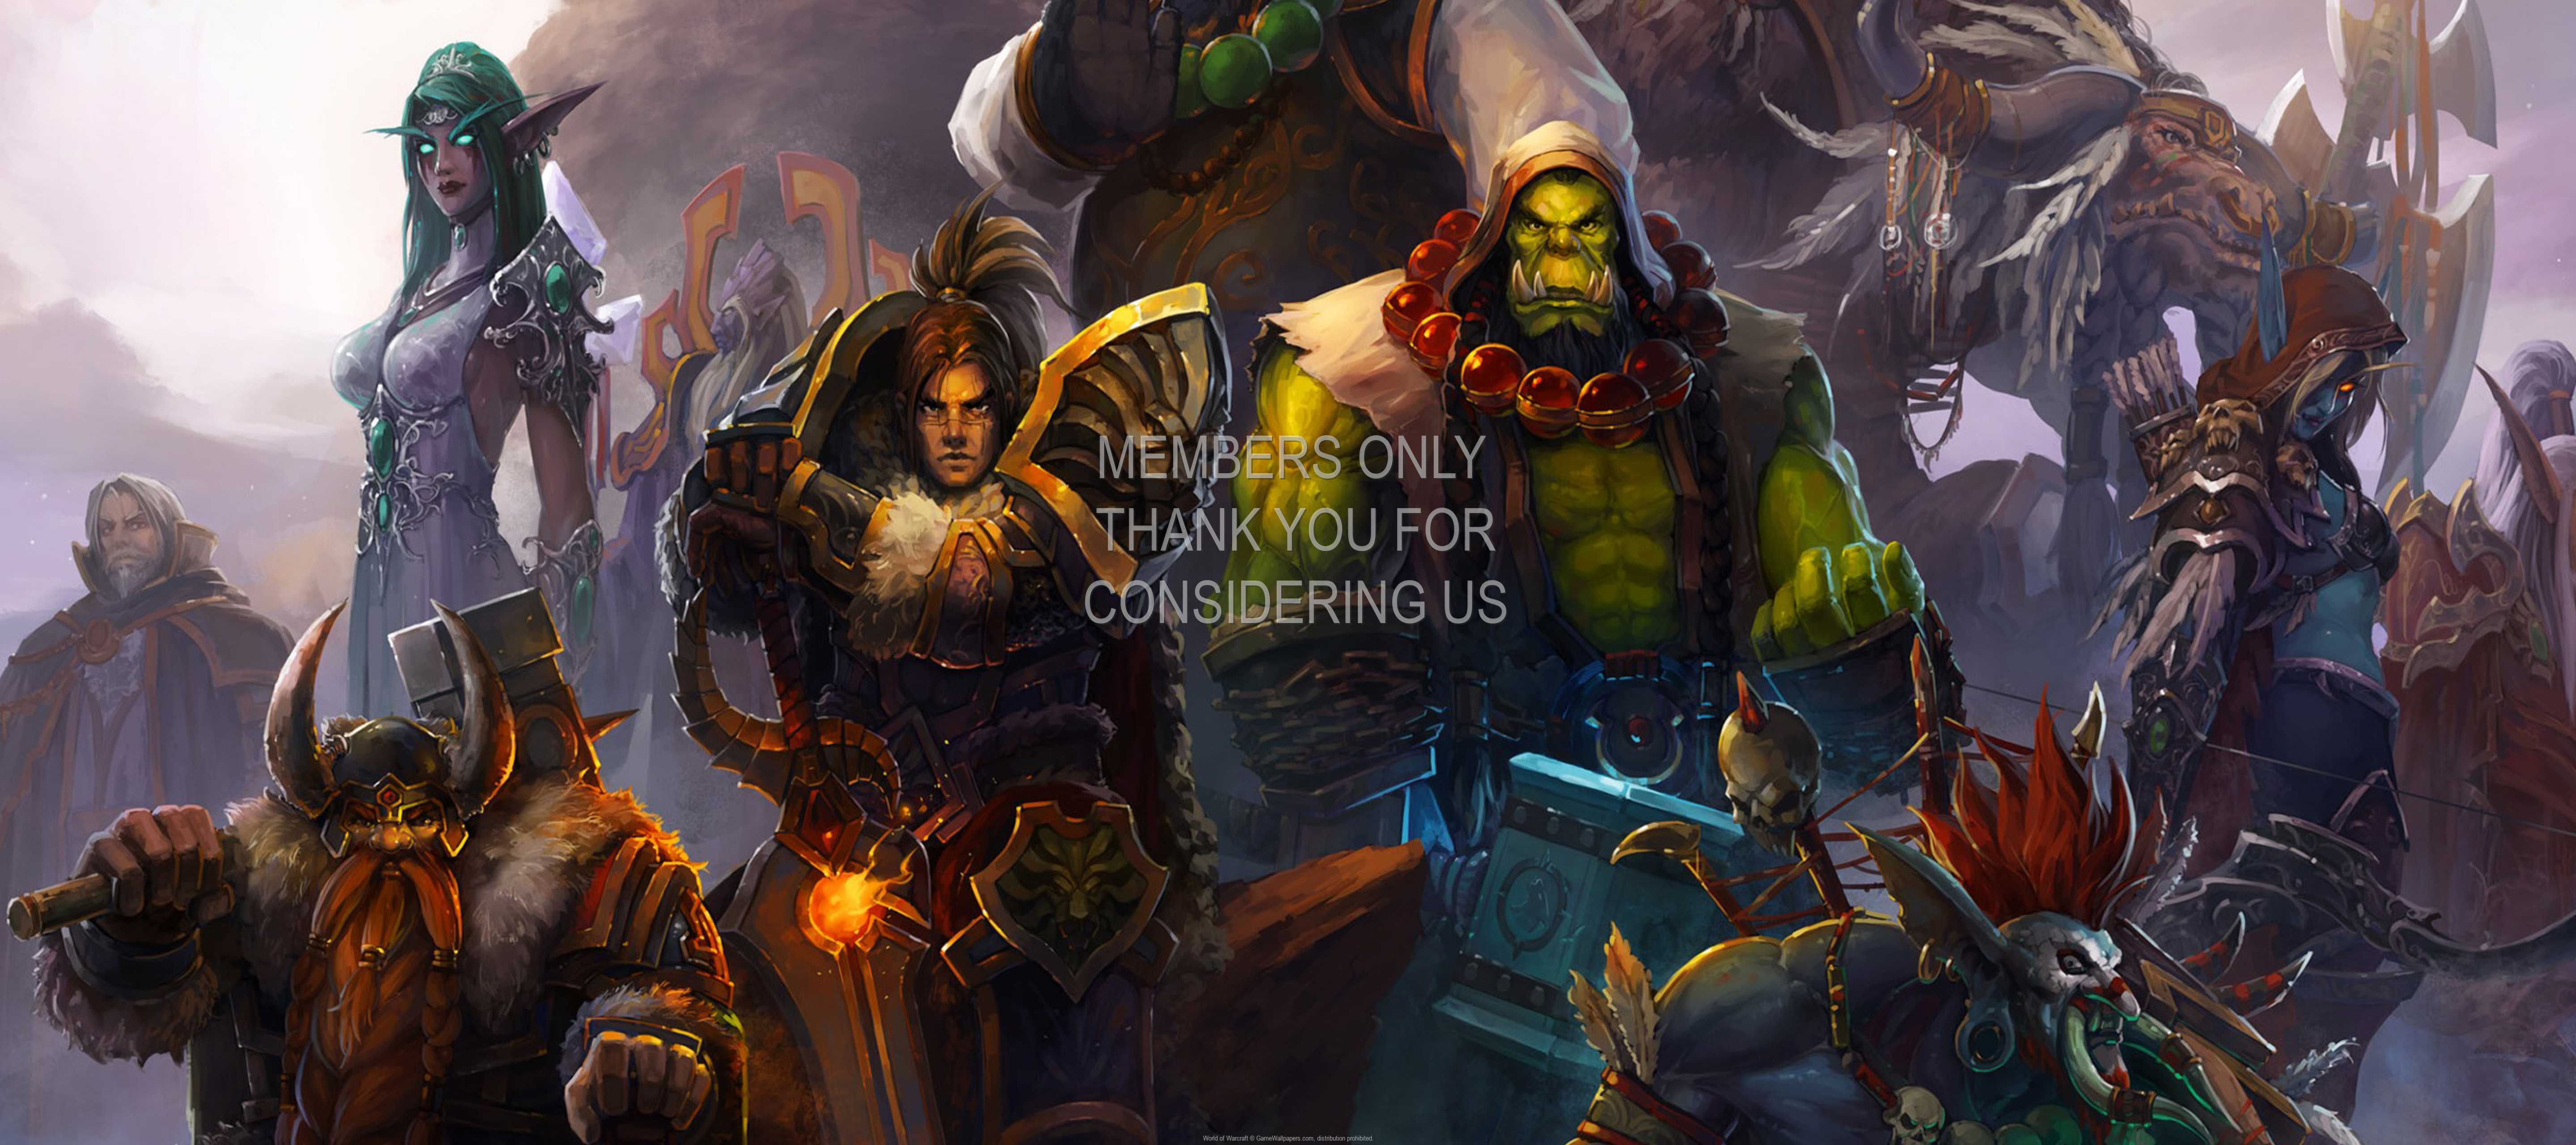 World of Warcraft 1440p%20Horizontal Mobile wallpaper or background 15